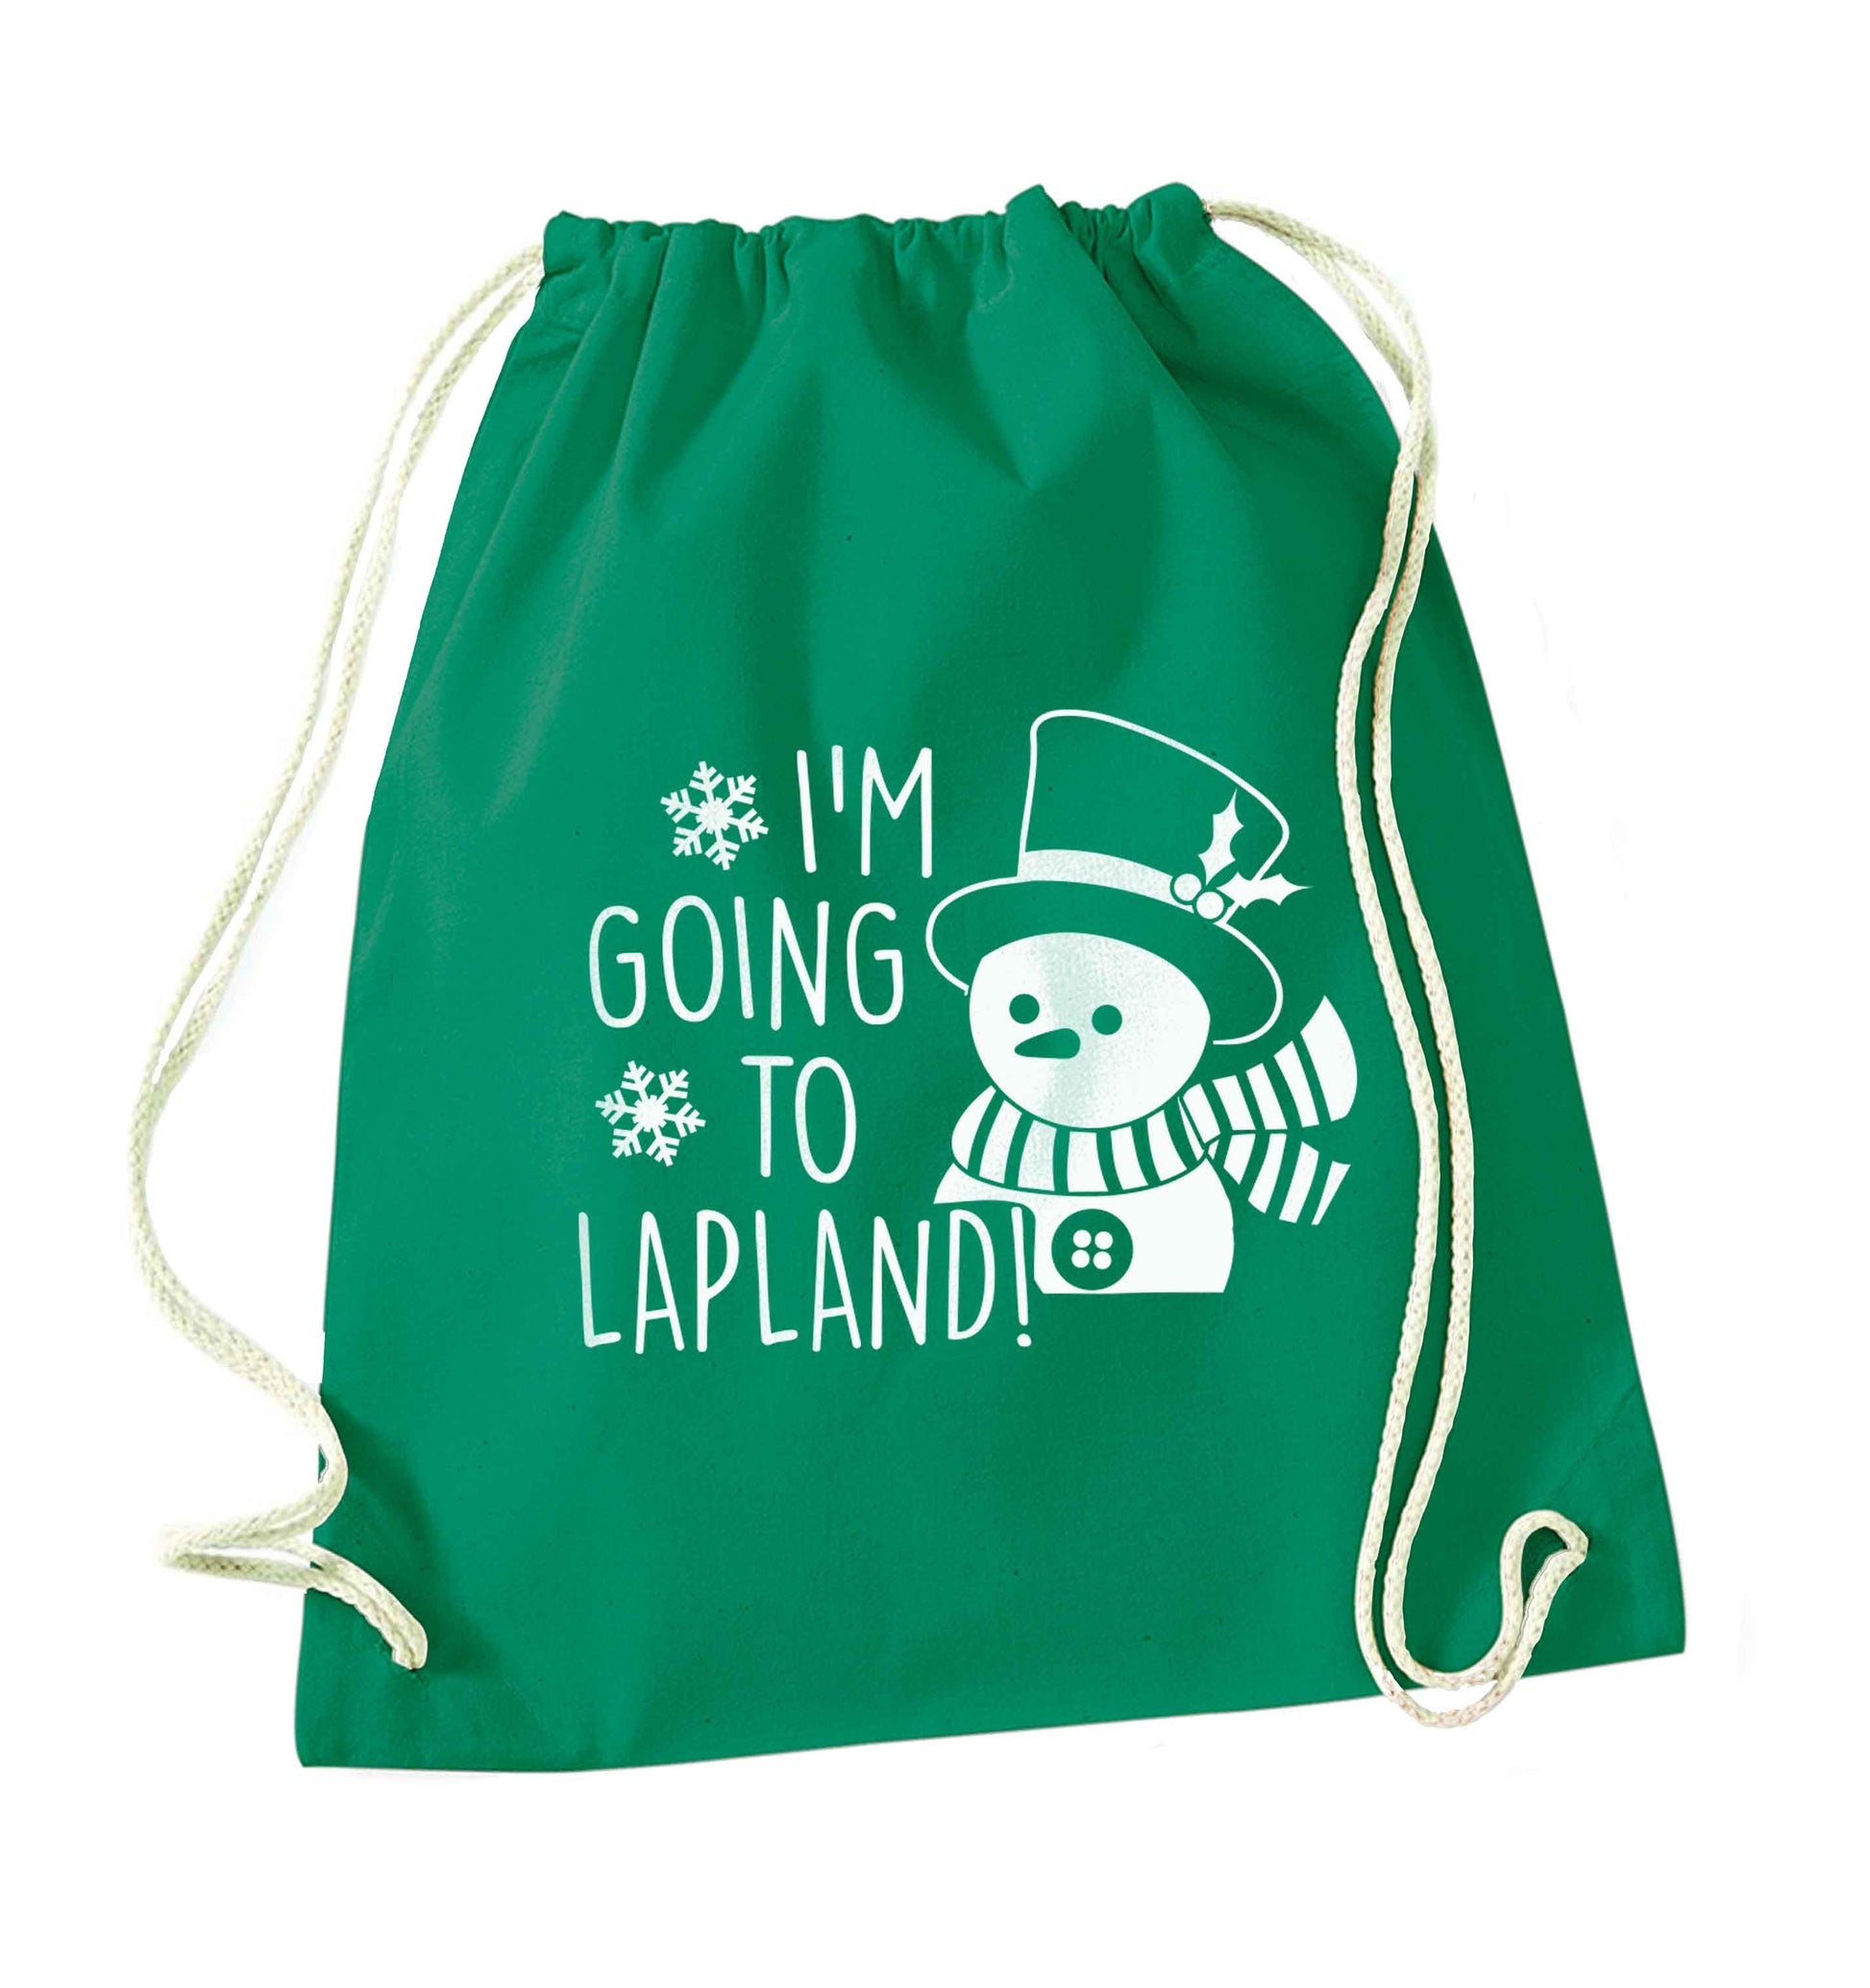 I'm going to Lapland green drawstring bag